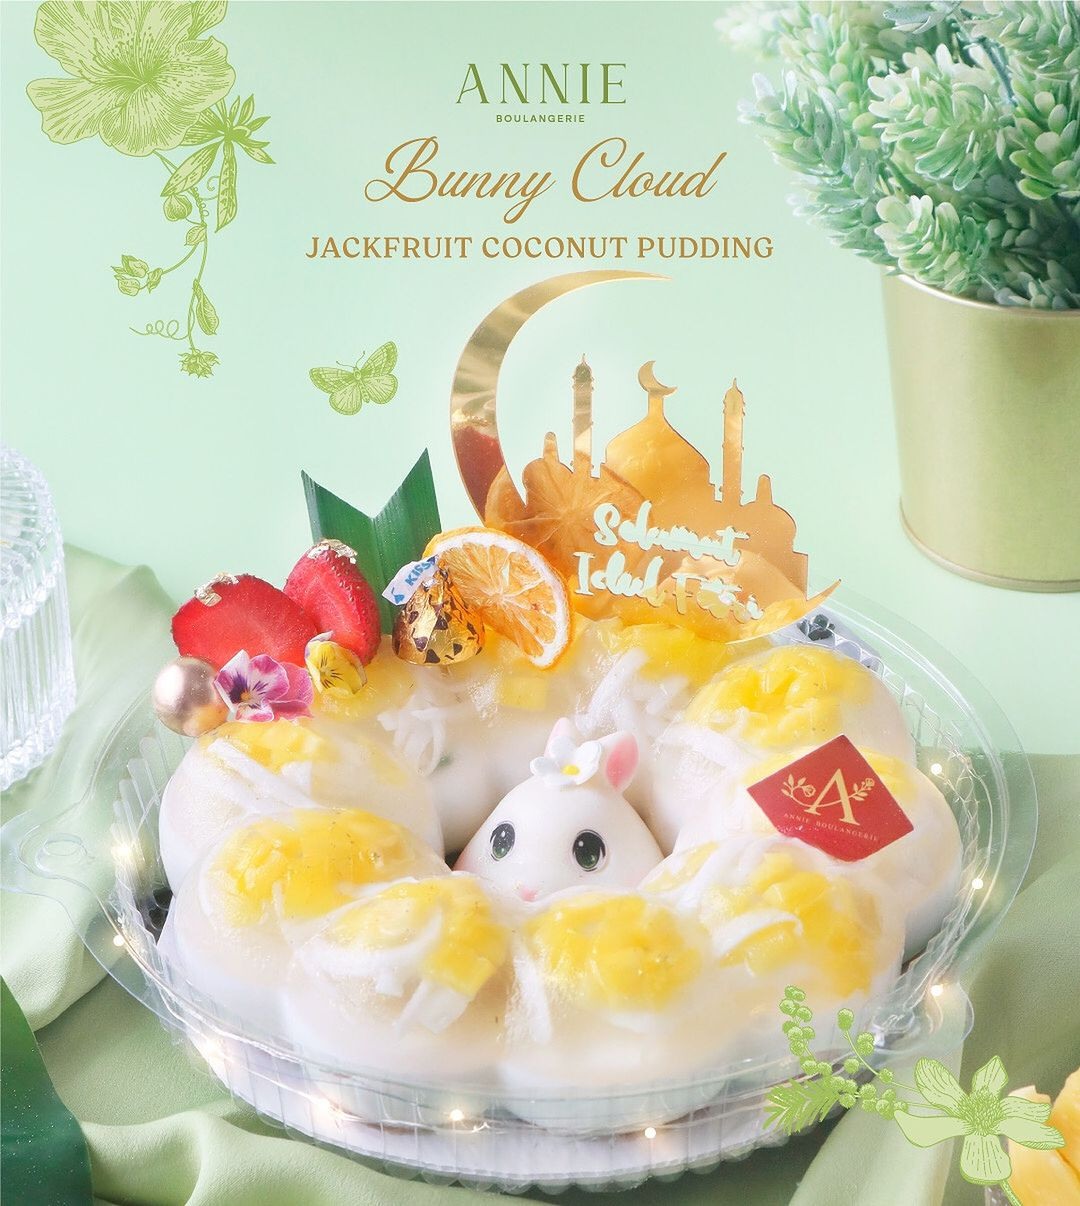 Bunny CloudJack Fruit Coconut Pudding